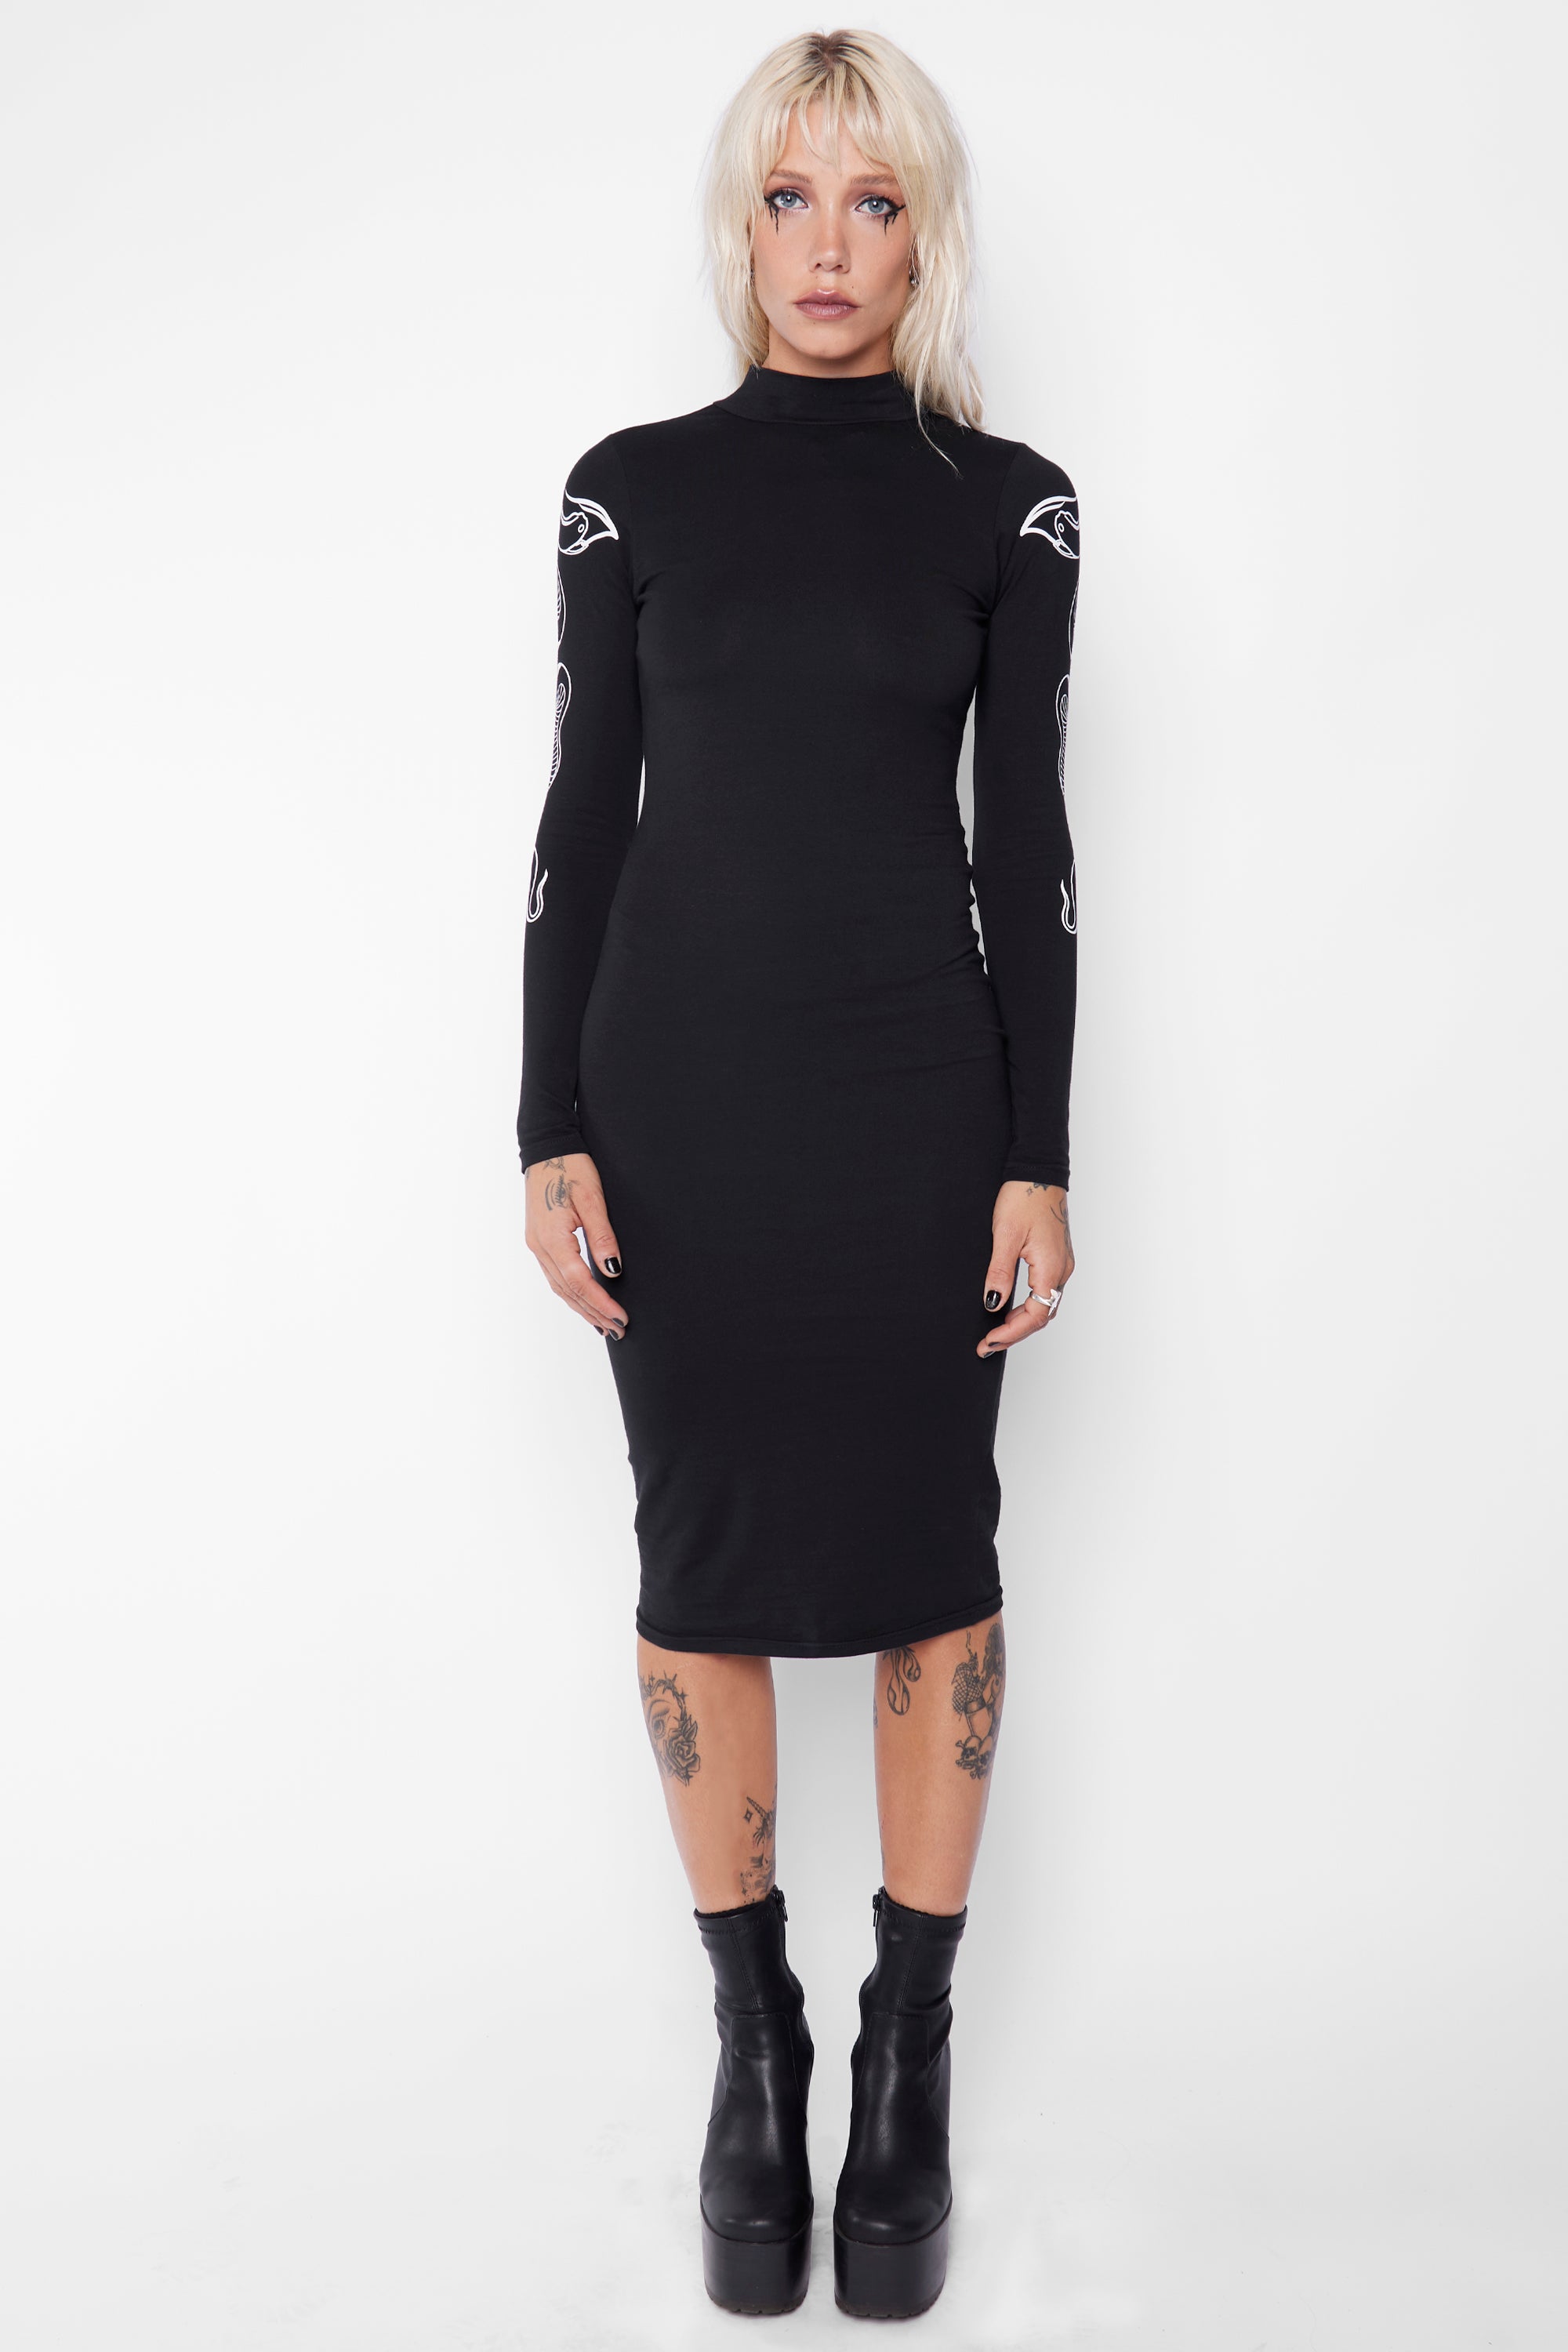 Paradigm High Neck Midi Dress - Mary Wyatt London